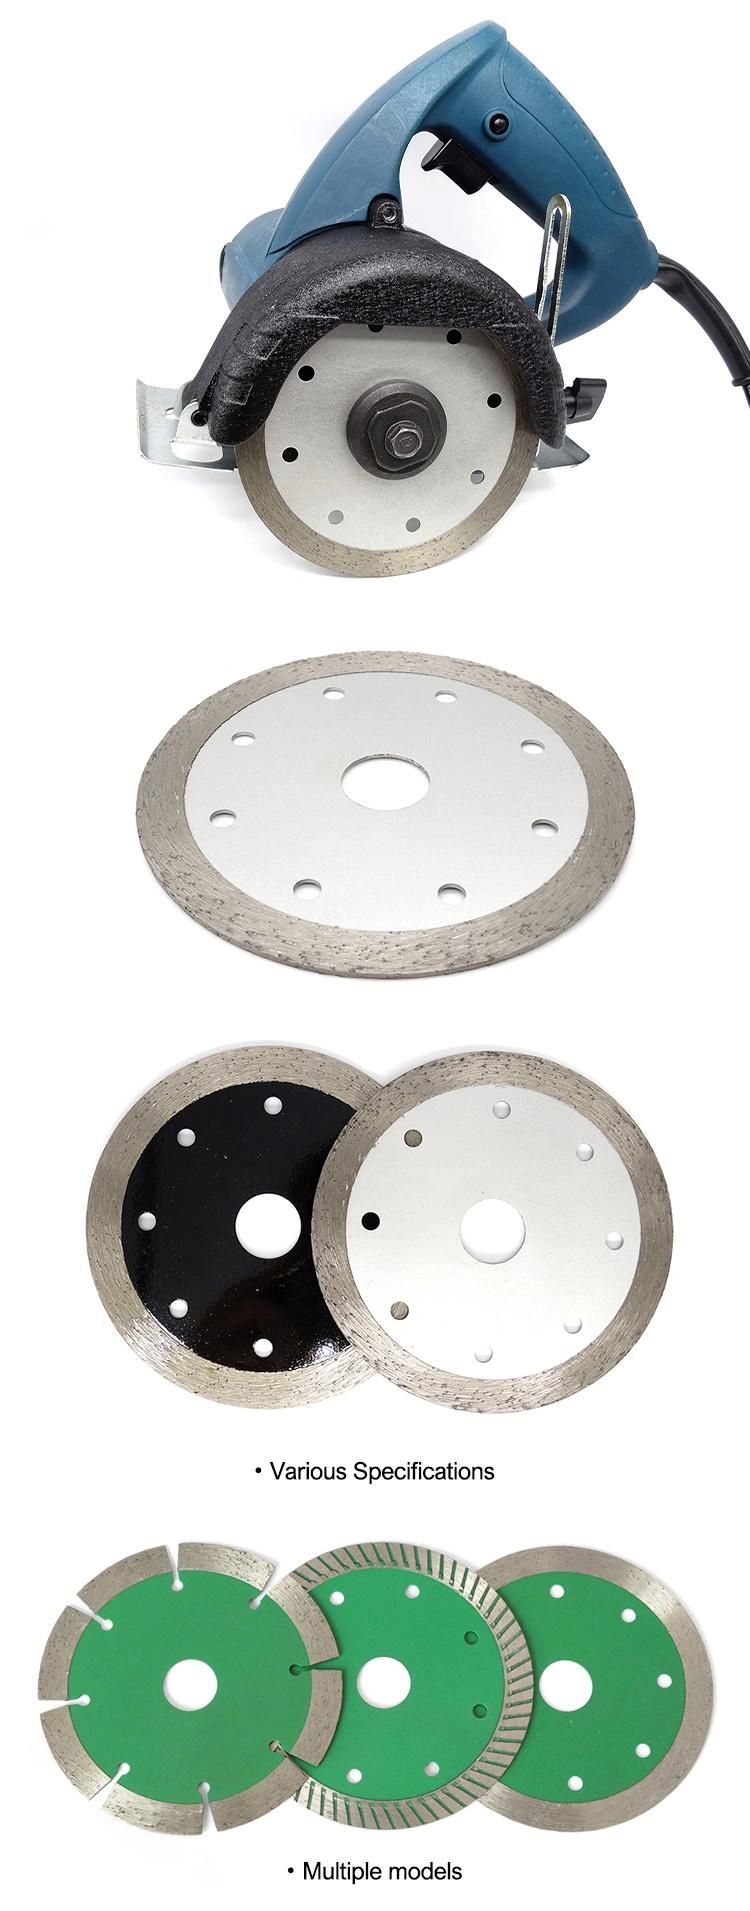 Concrete Wheels Diamond Cutting Discs for Hard Stone